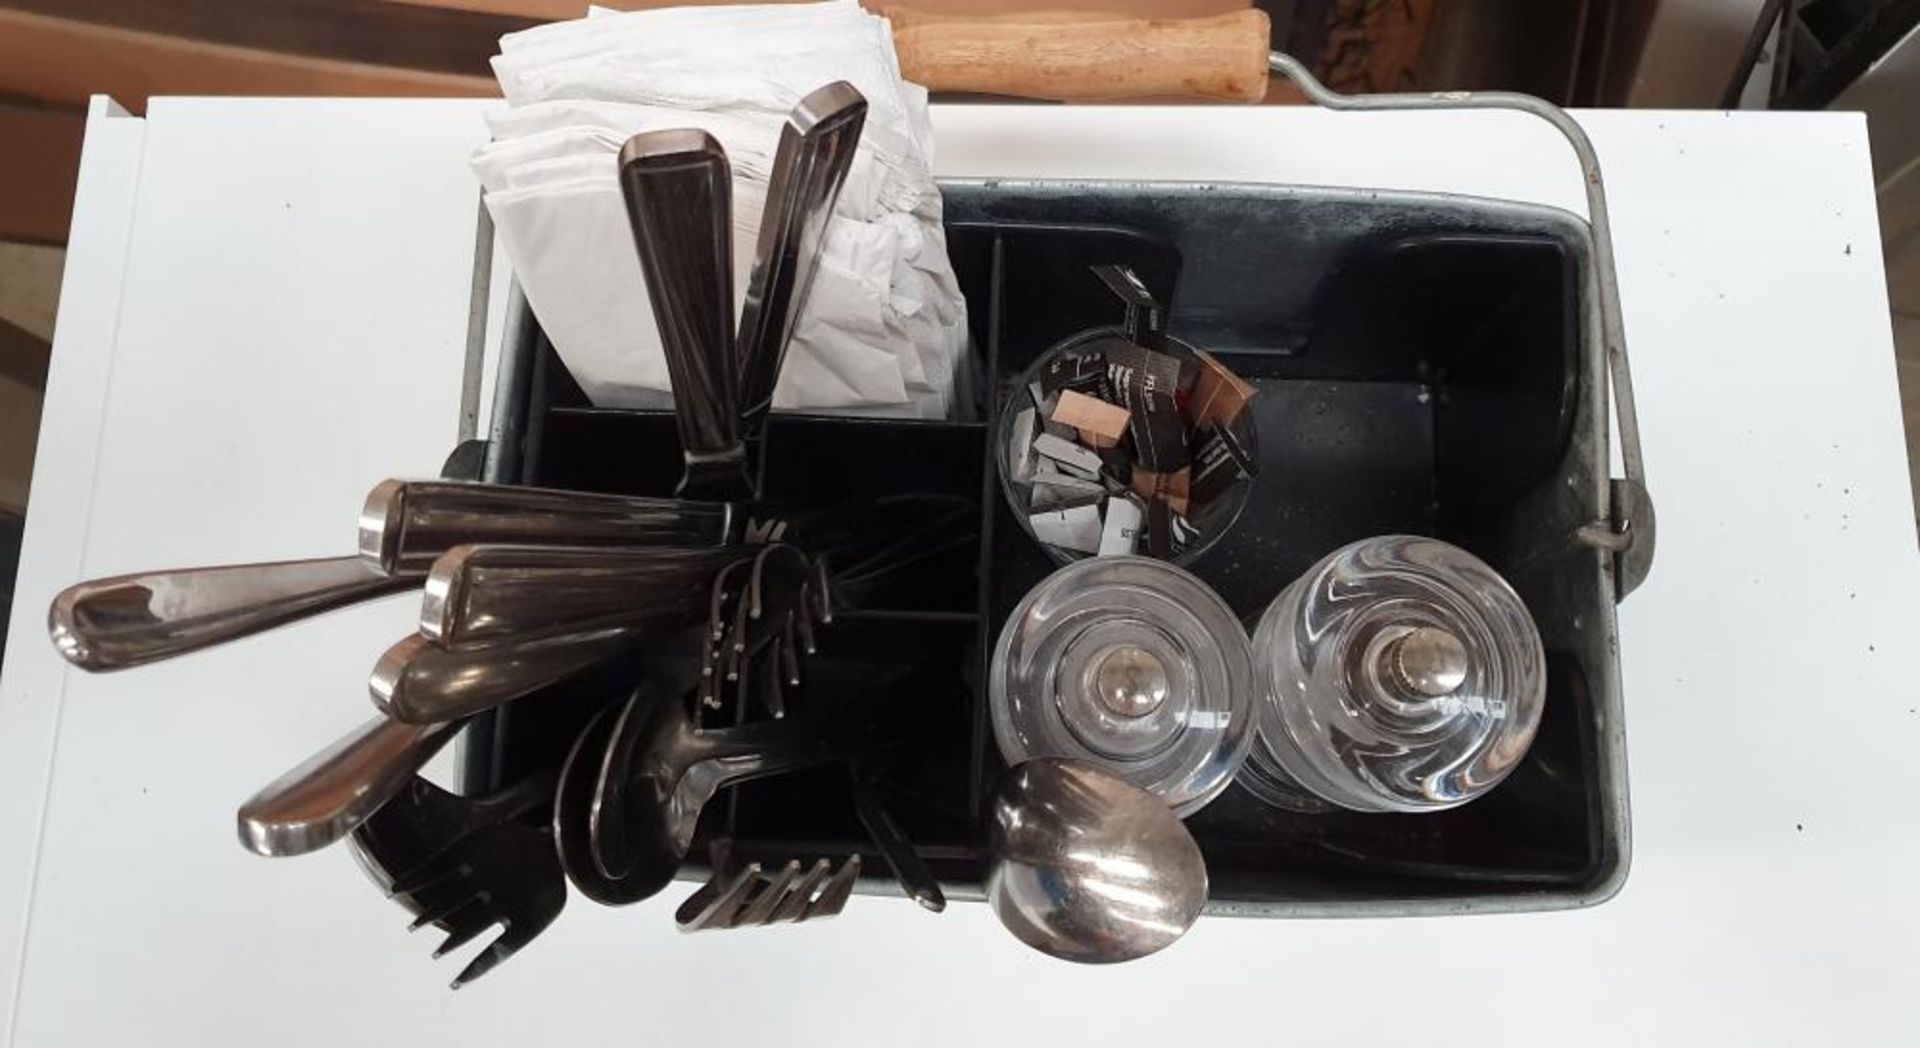 6 x Cutlery, Napkin and Salt & Pepper Rectangular Metal Tins - CL425 - Location: Altrincham WA14 - Image 4 of 5